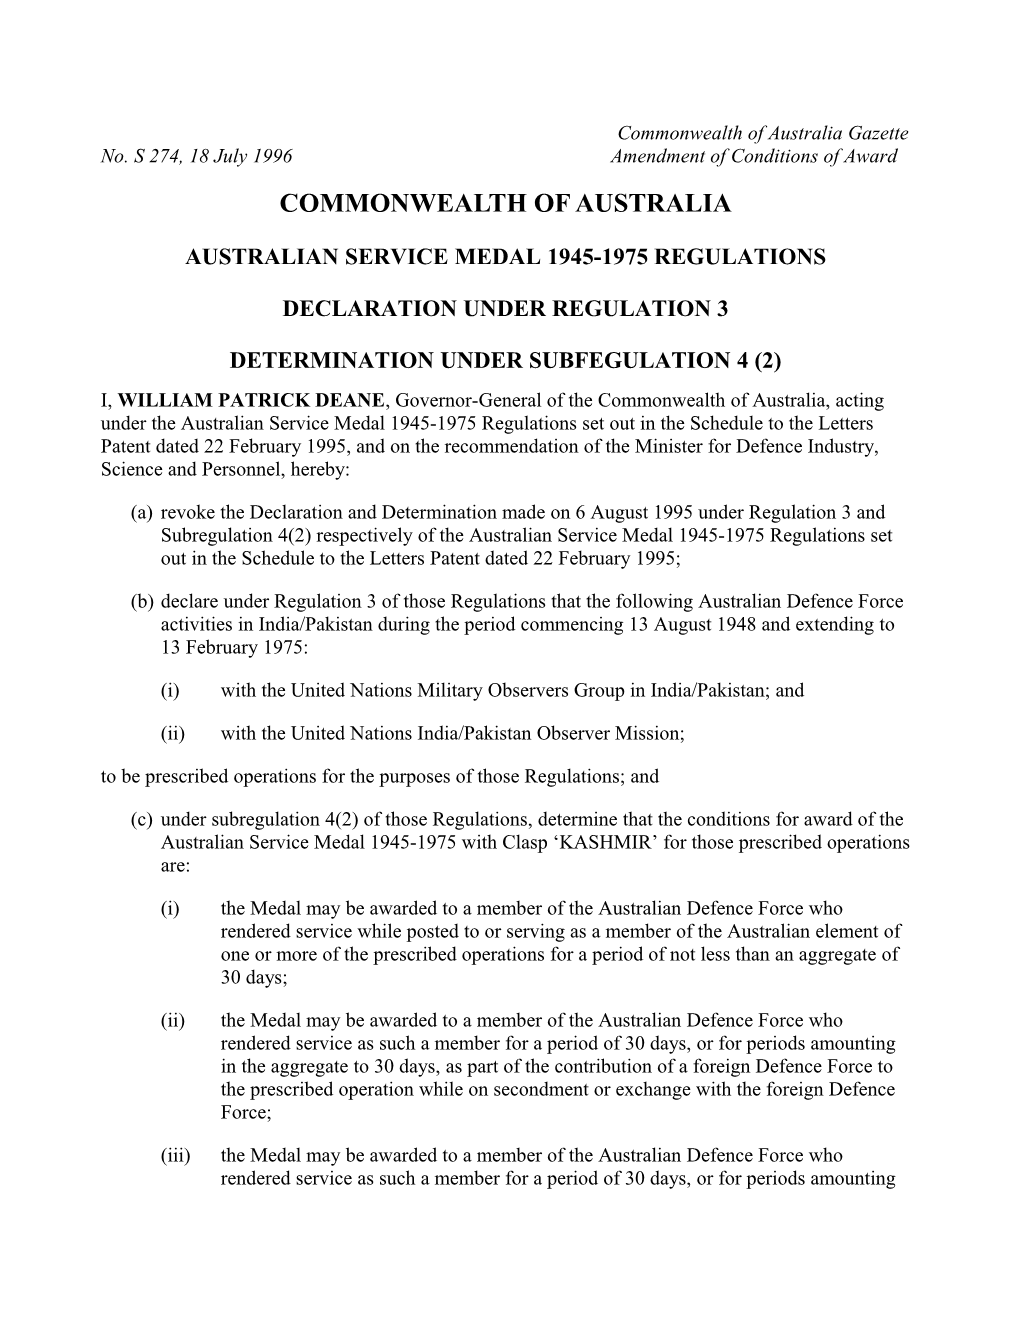 Australian Service Medal 1945-1975 Regulations